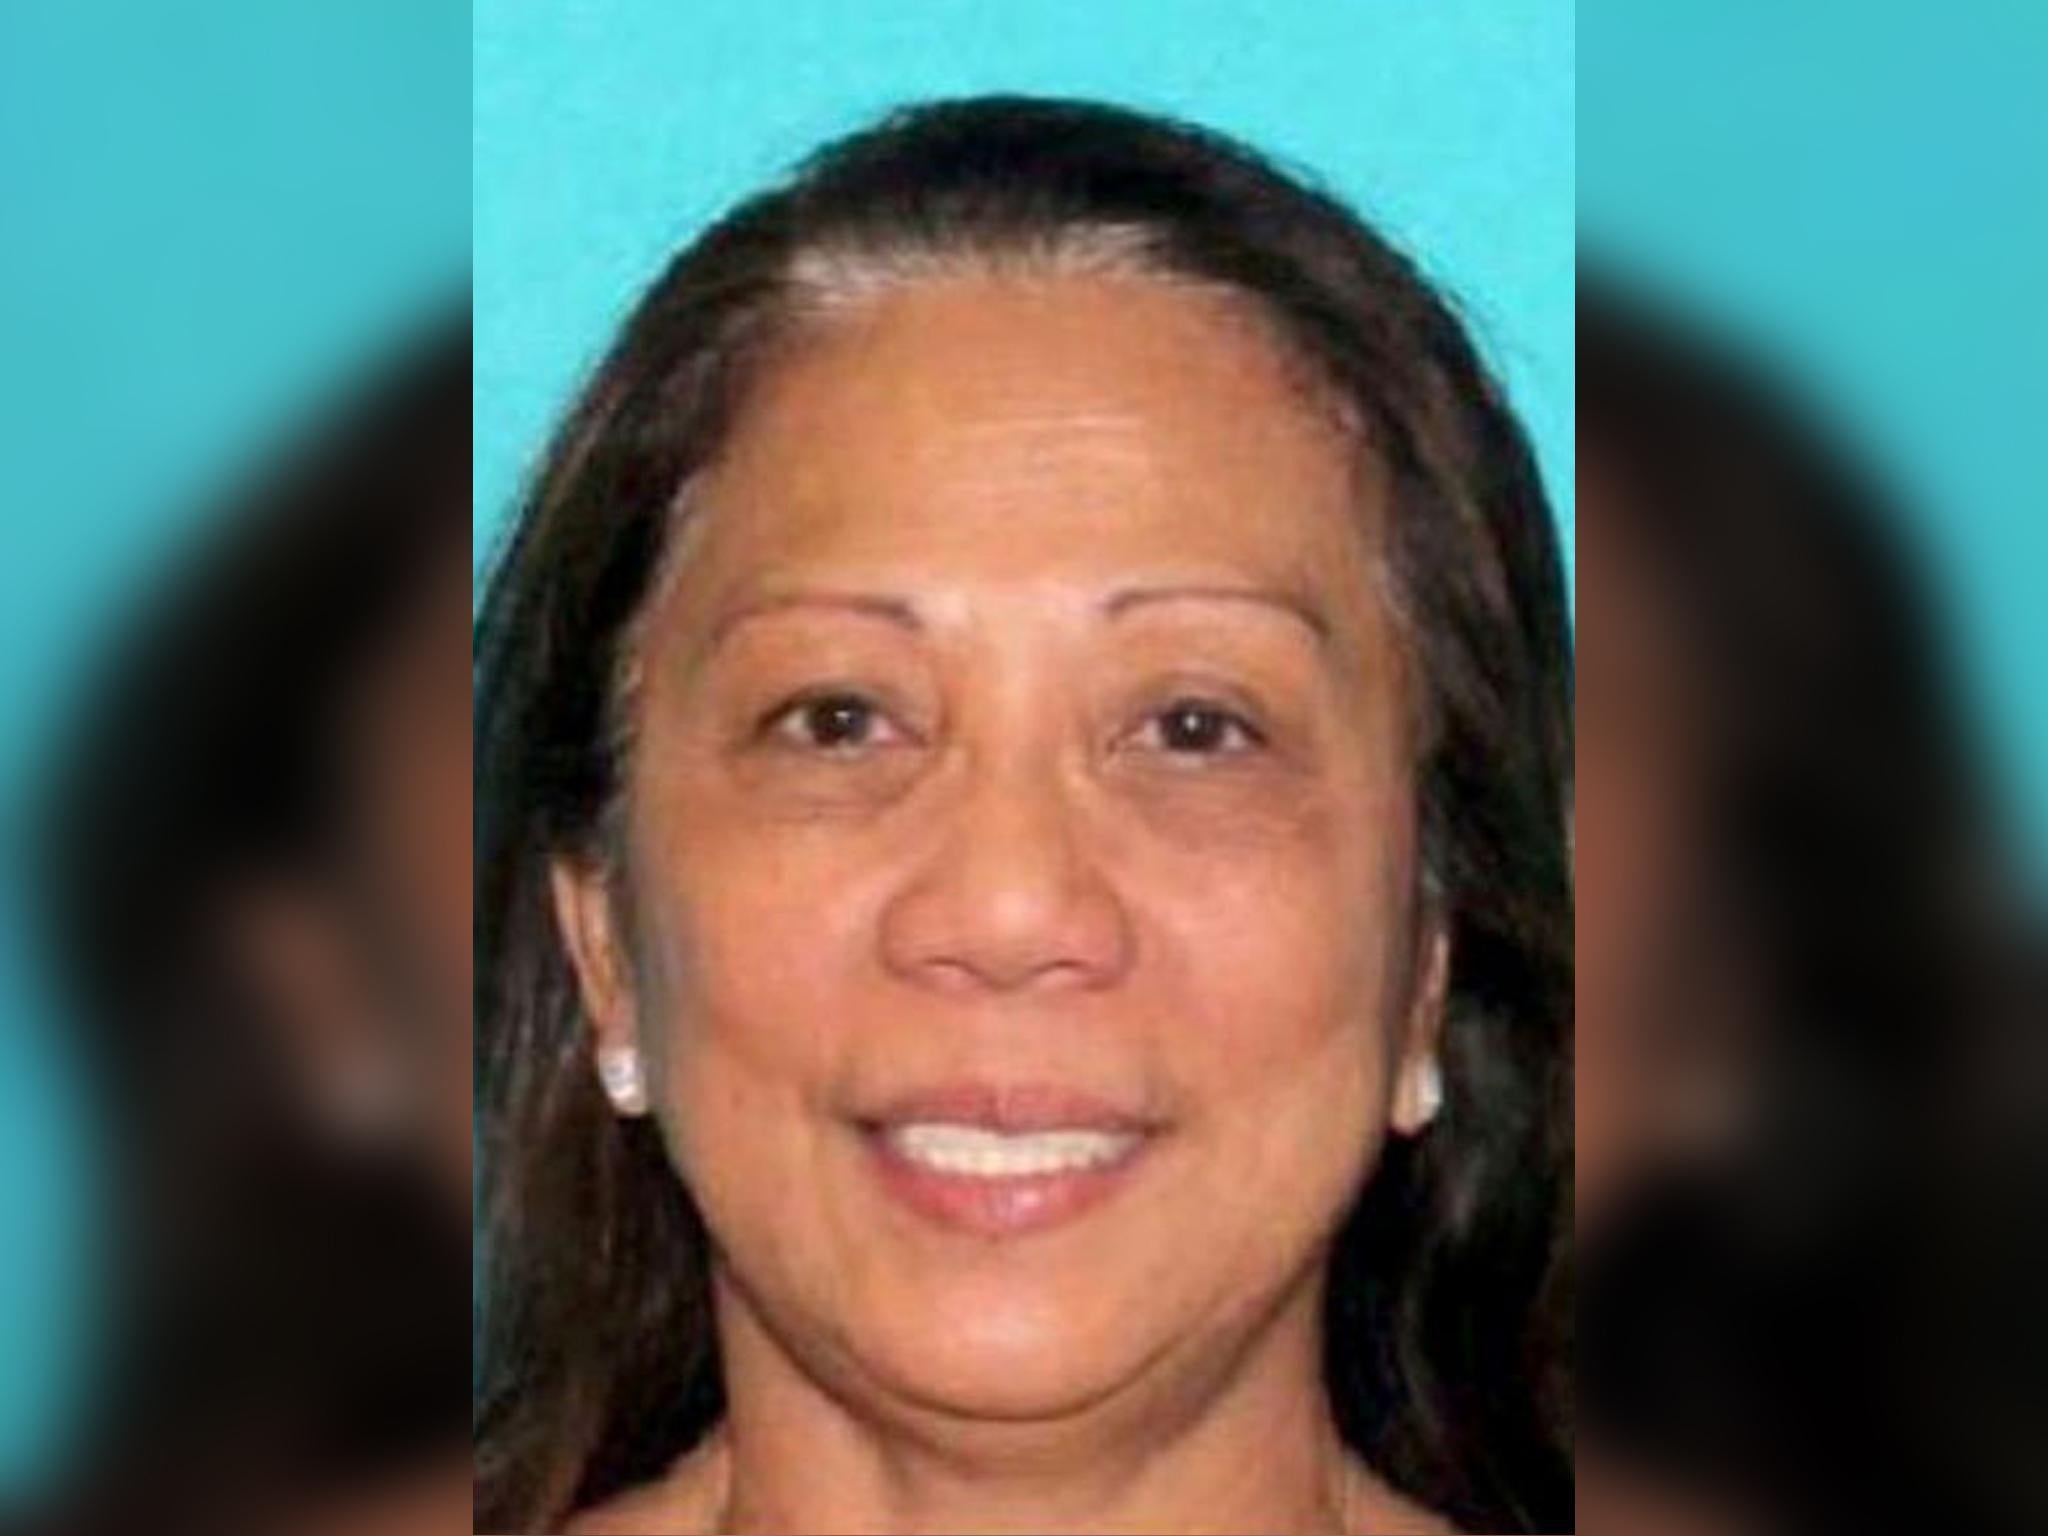 Marilou Danley, 62, the girlfriend of the Las Vegas killer, has returned to the US